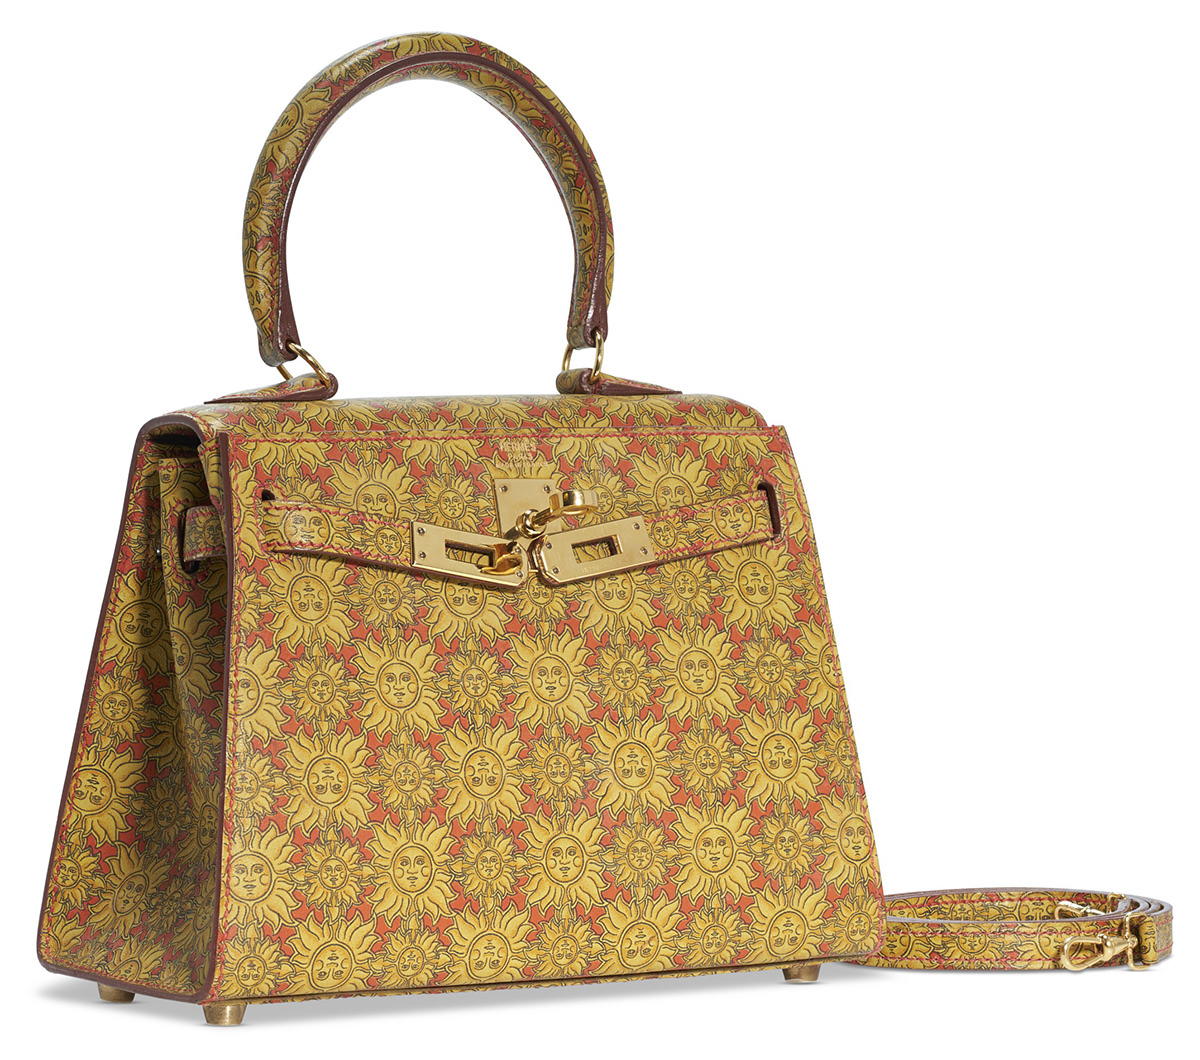 Hermes Bag Collection】Most Popular Hermes Handbags Review